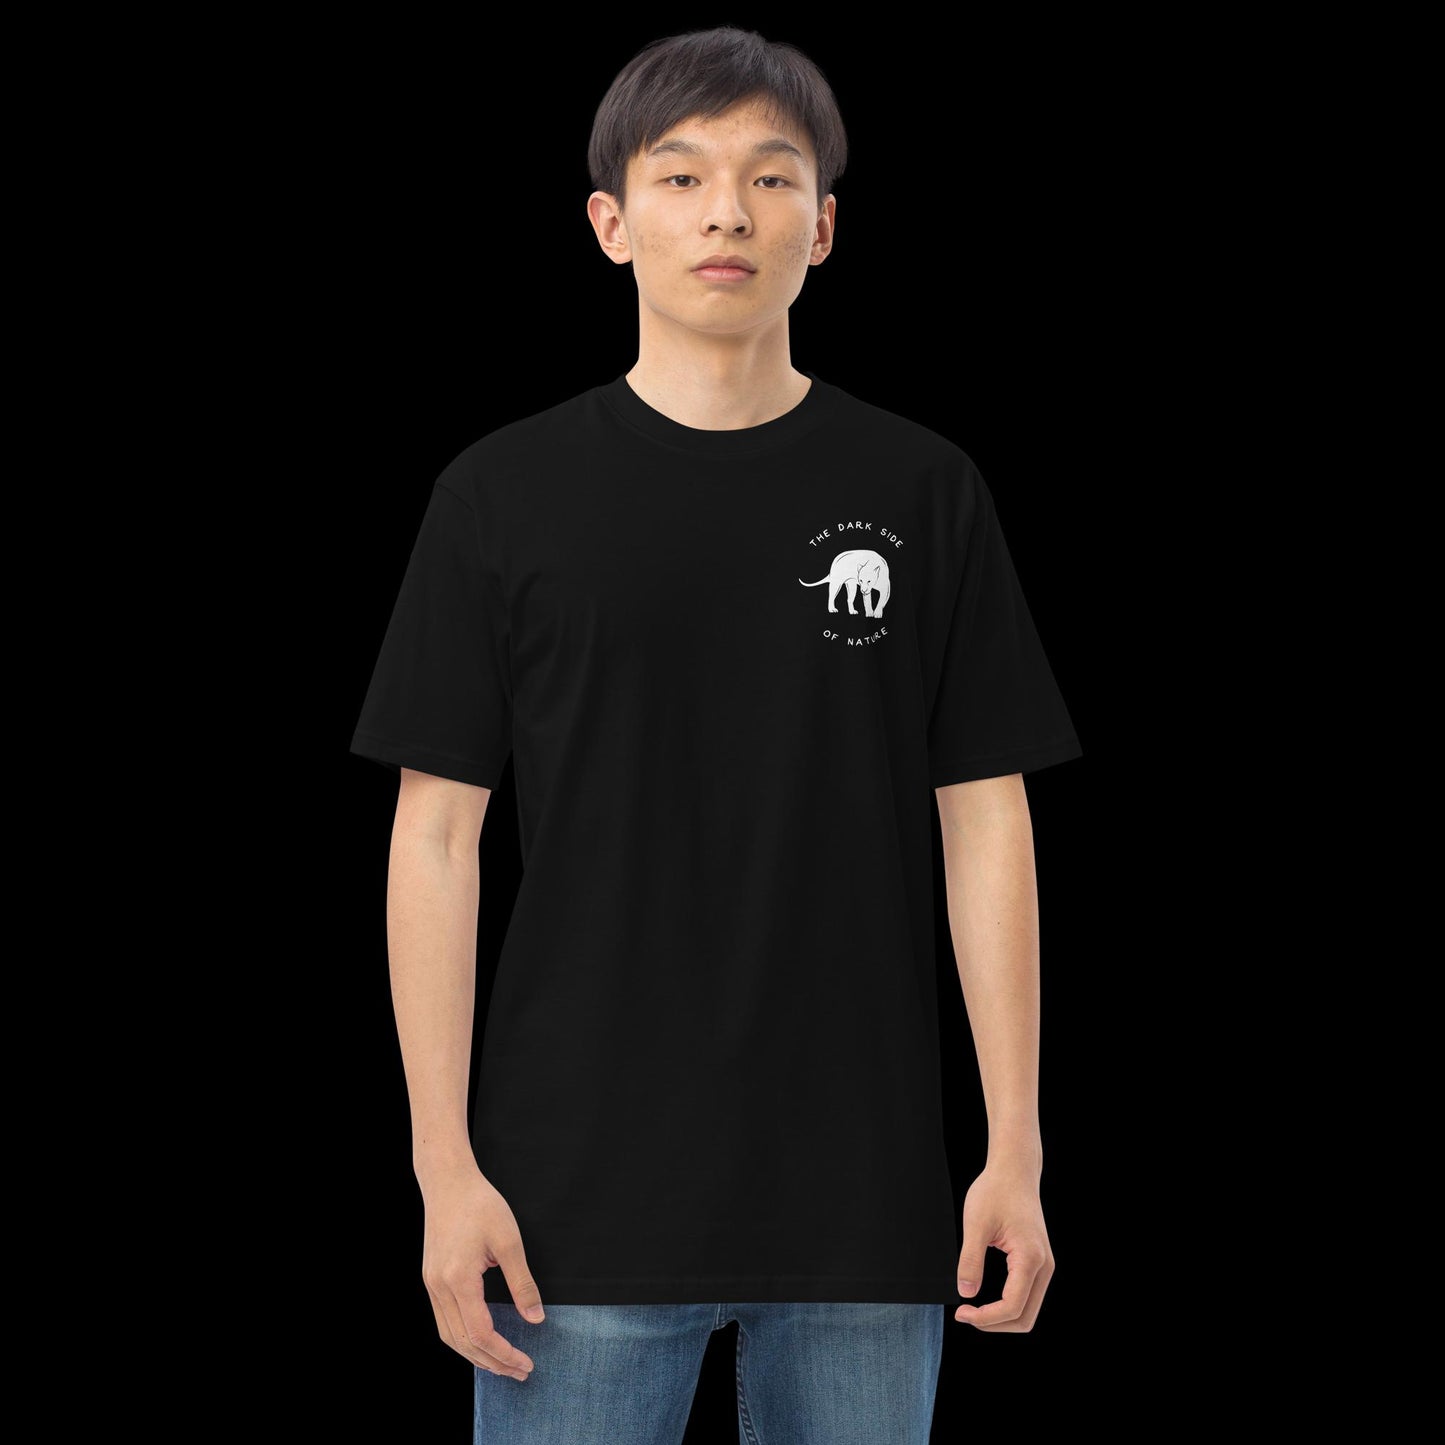 The Dark Side Premium T-Shirt